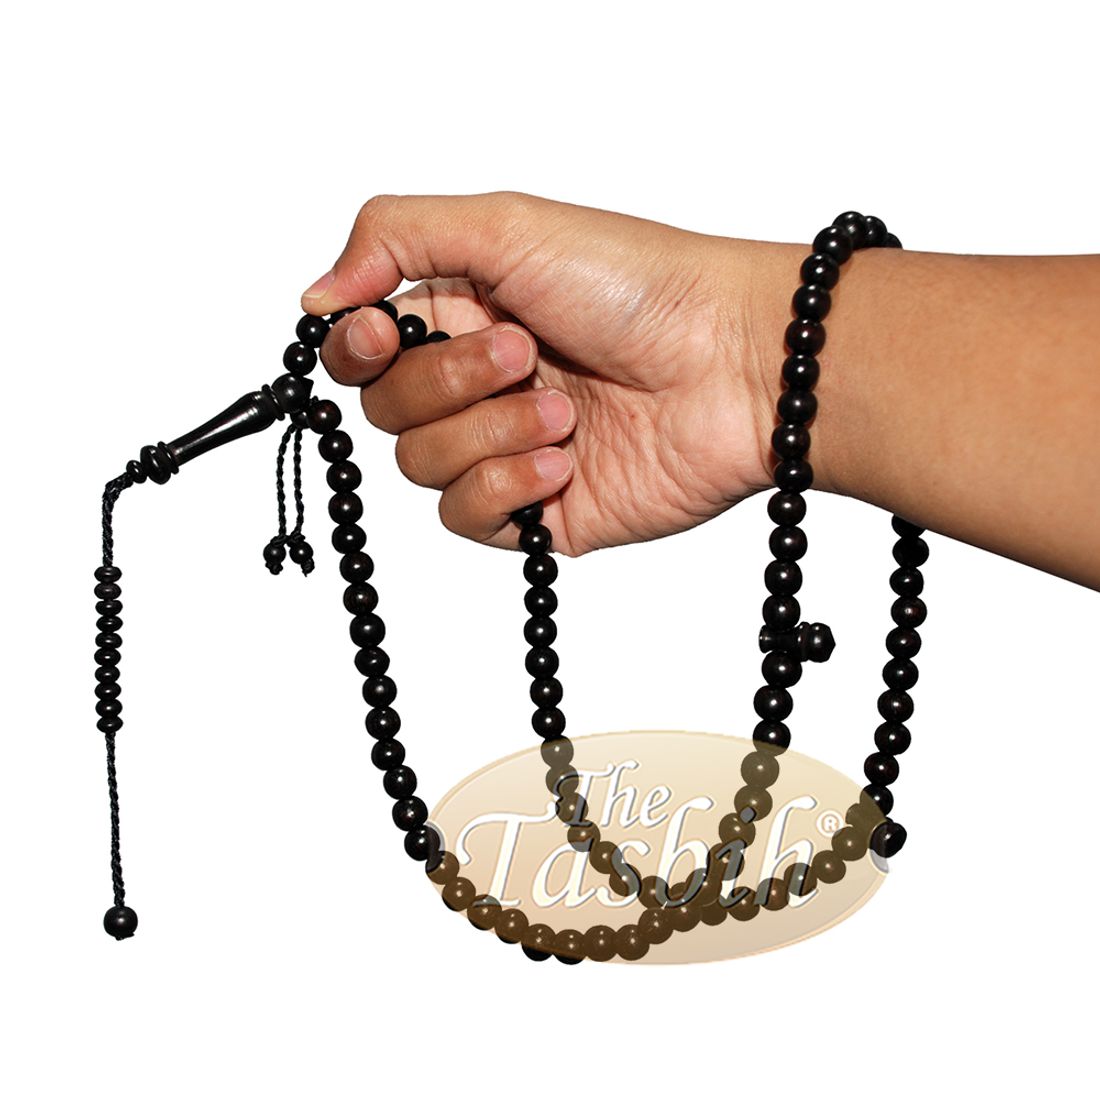 Kalung Tasbih Tasbih – Kayu Asam Dicelup Buatan Tangan 99-manik dengan Penghenti Kayu